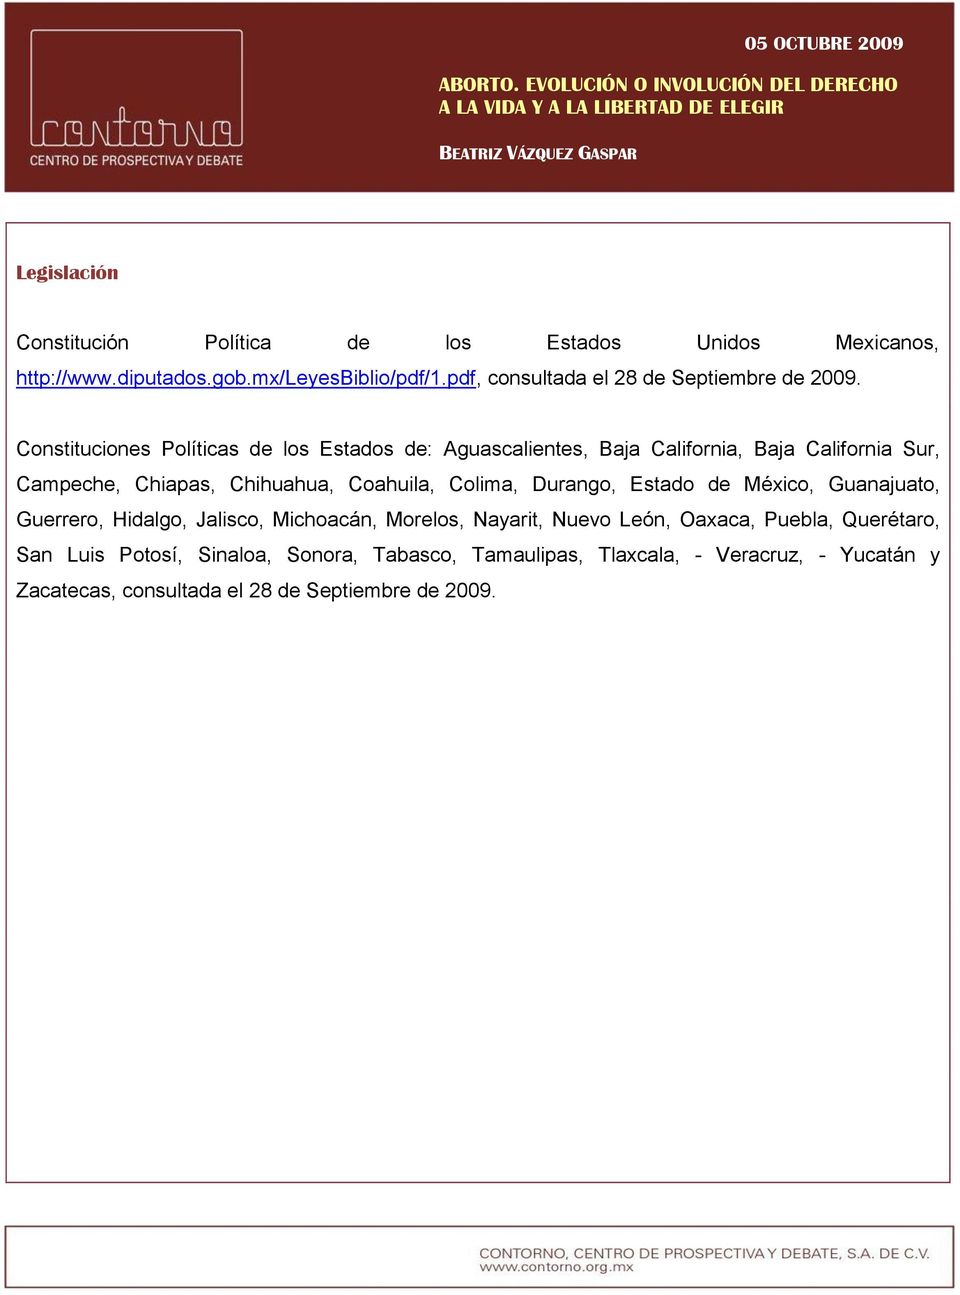 Constituciones Políticas de los Estados de: Aguascalientes, Baja California, Baja California Sur, Campeche, Chiapas, Chihuahua, Coahuila,